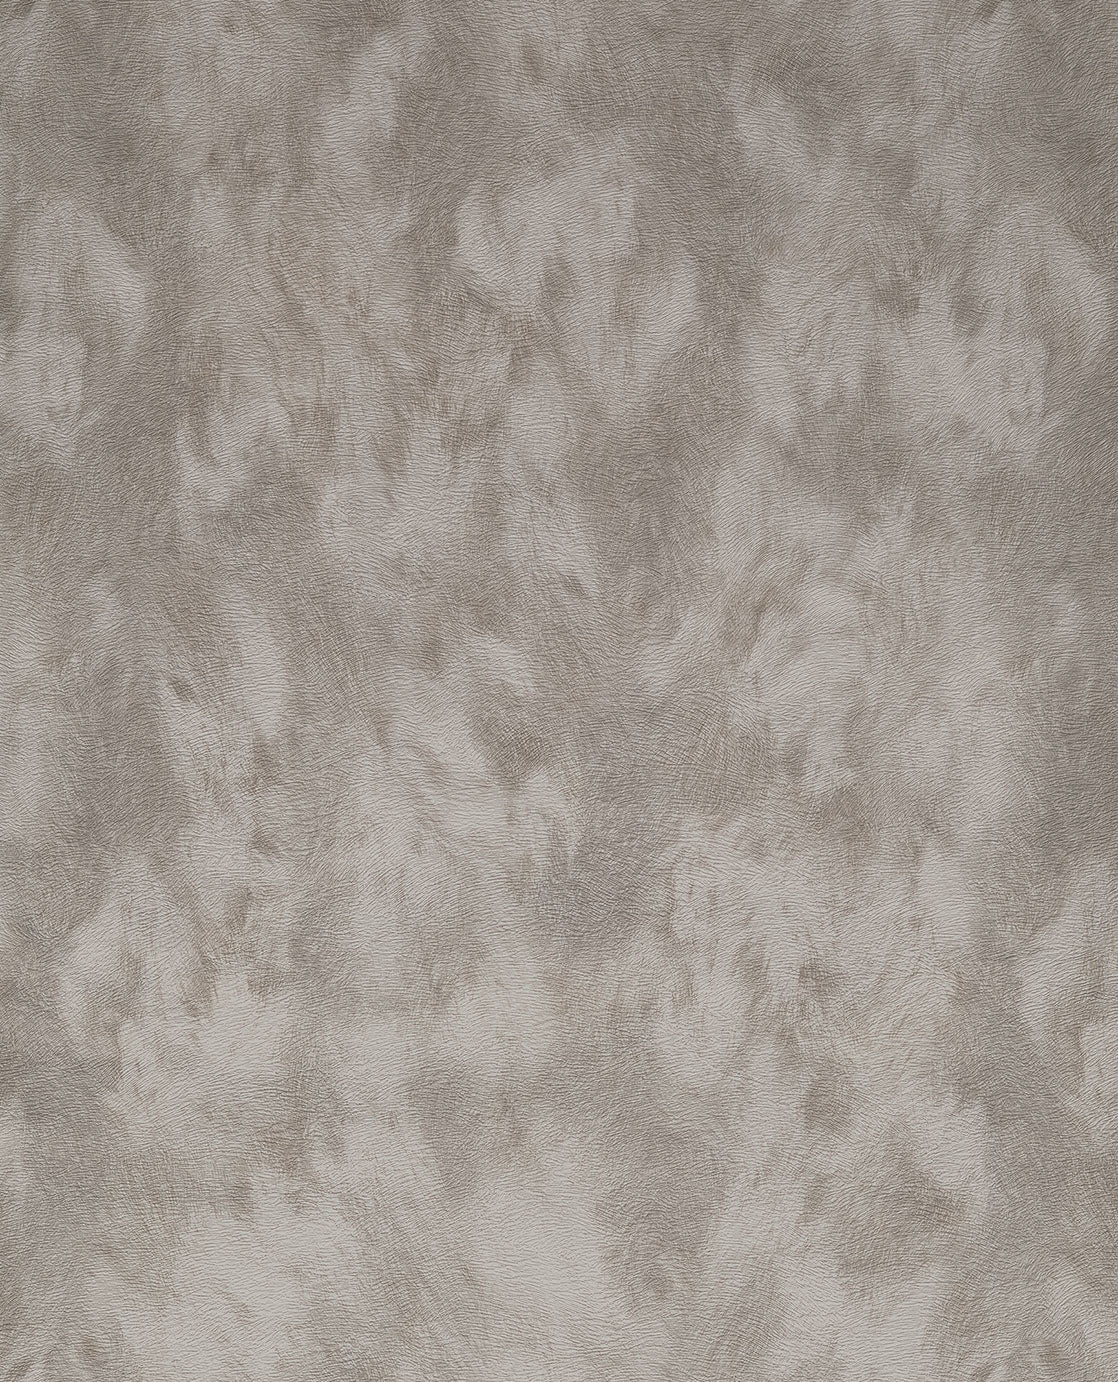 Skin Faux Fur Textured wallpaper